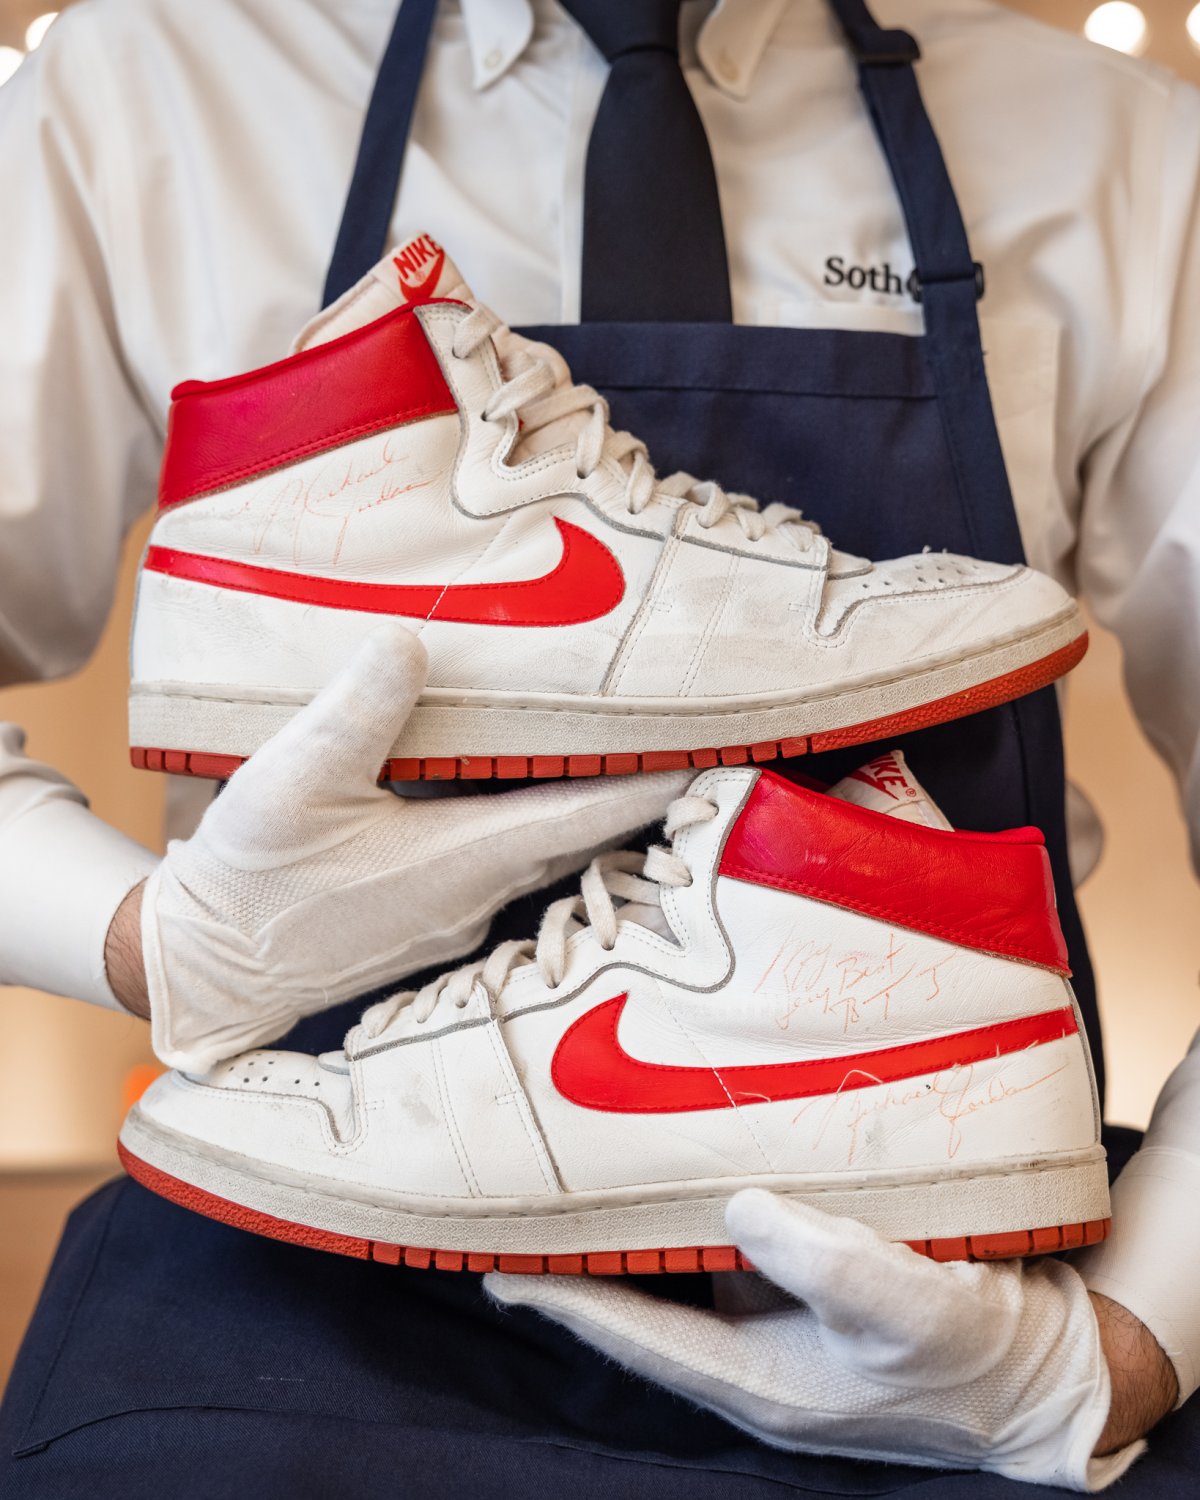 Top 10 Most Expensive Air Jordan Sneakers Ever Sold: Michael Jordan's Flu  Game Shoes Top The List 